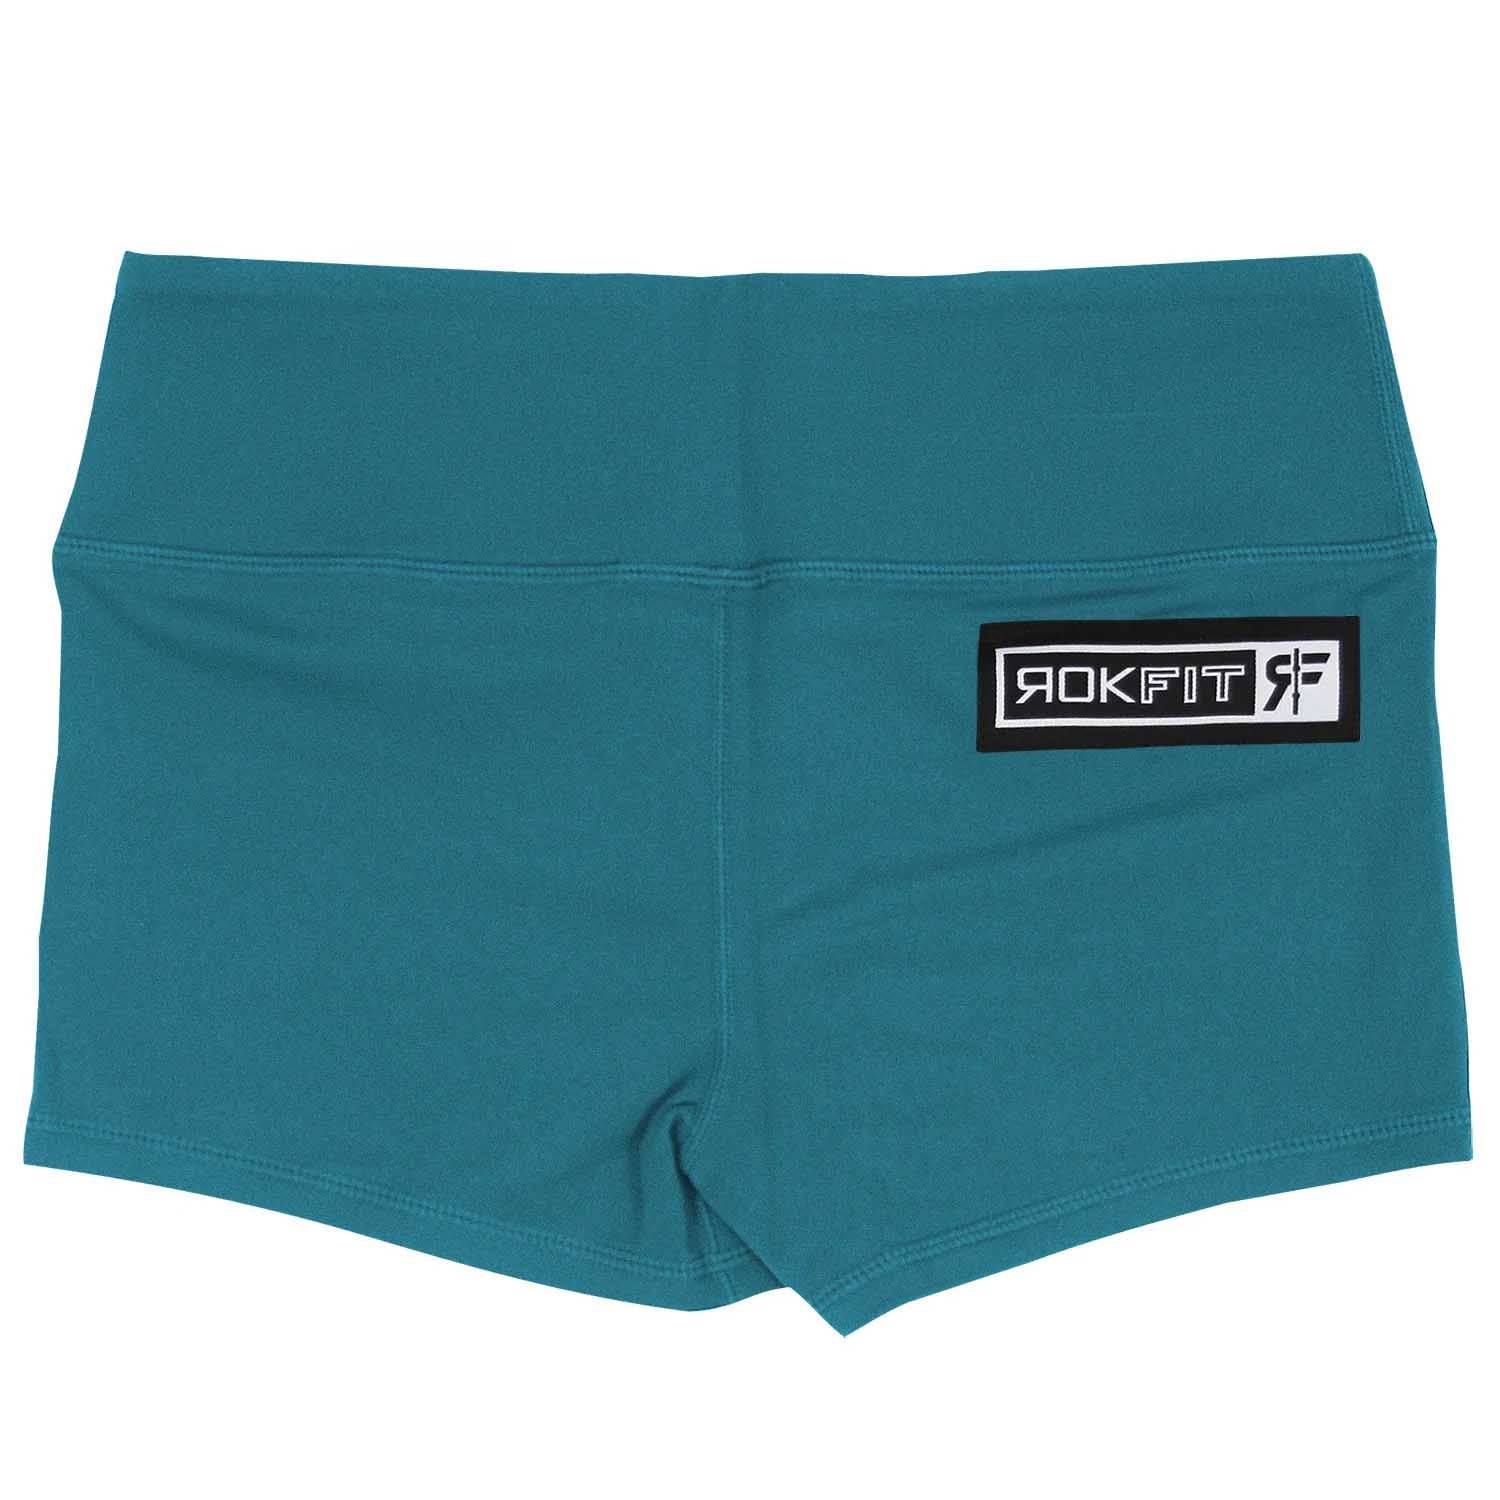 Pantalones cortos botín verde azulado